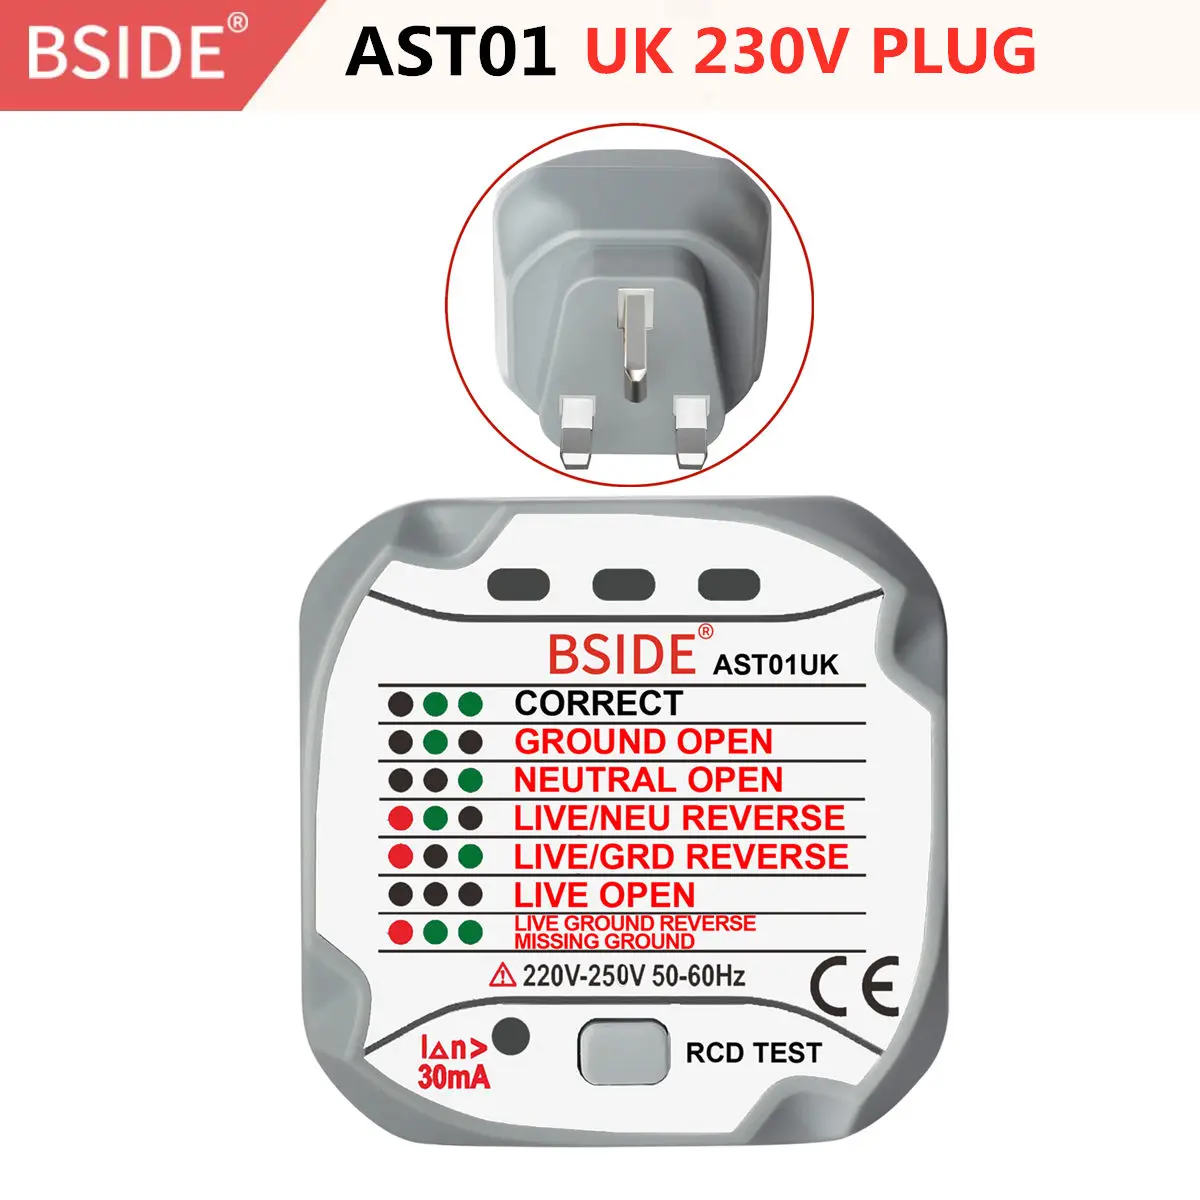 BSIDE AST01UK розетка тест er автоматический детектор полярности электрической цепи настенная вилка с нейтральным живым заземлением тест провода ing RCD тест - Цвет: AST01 UK 230V